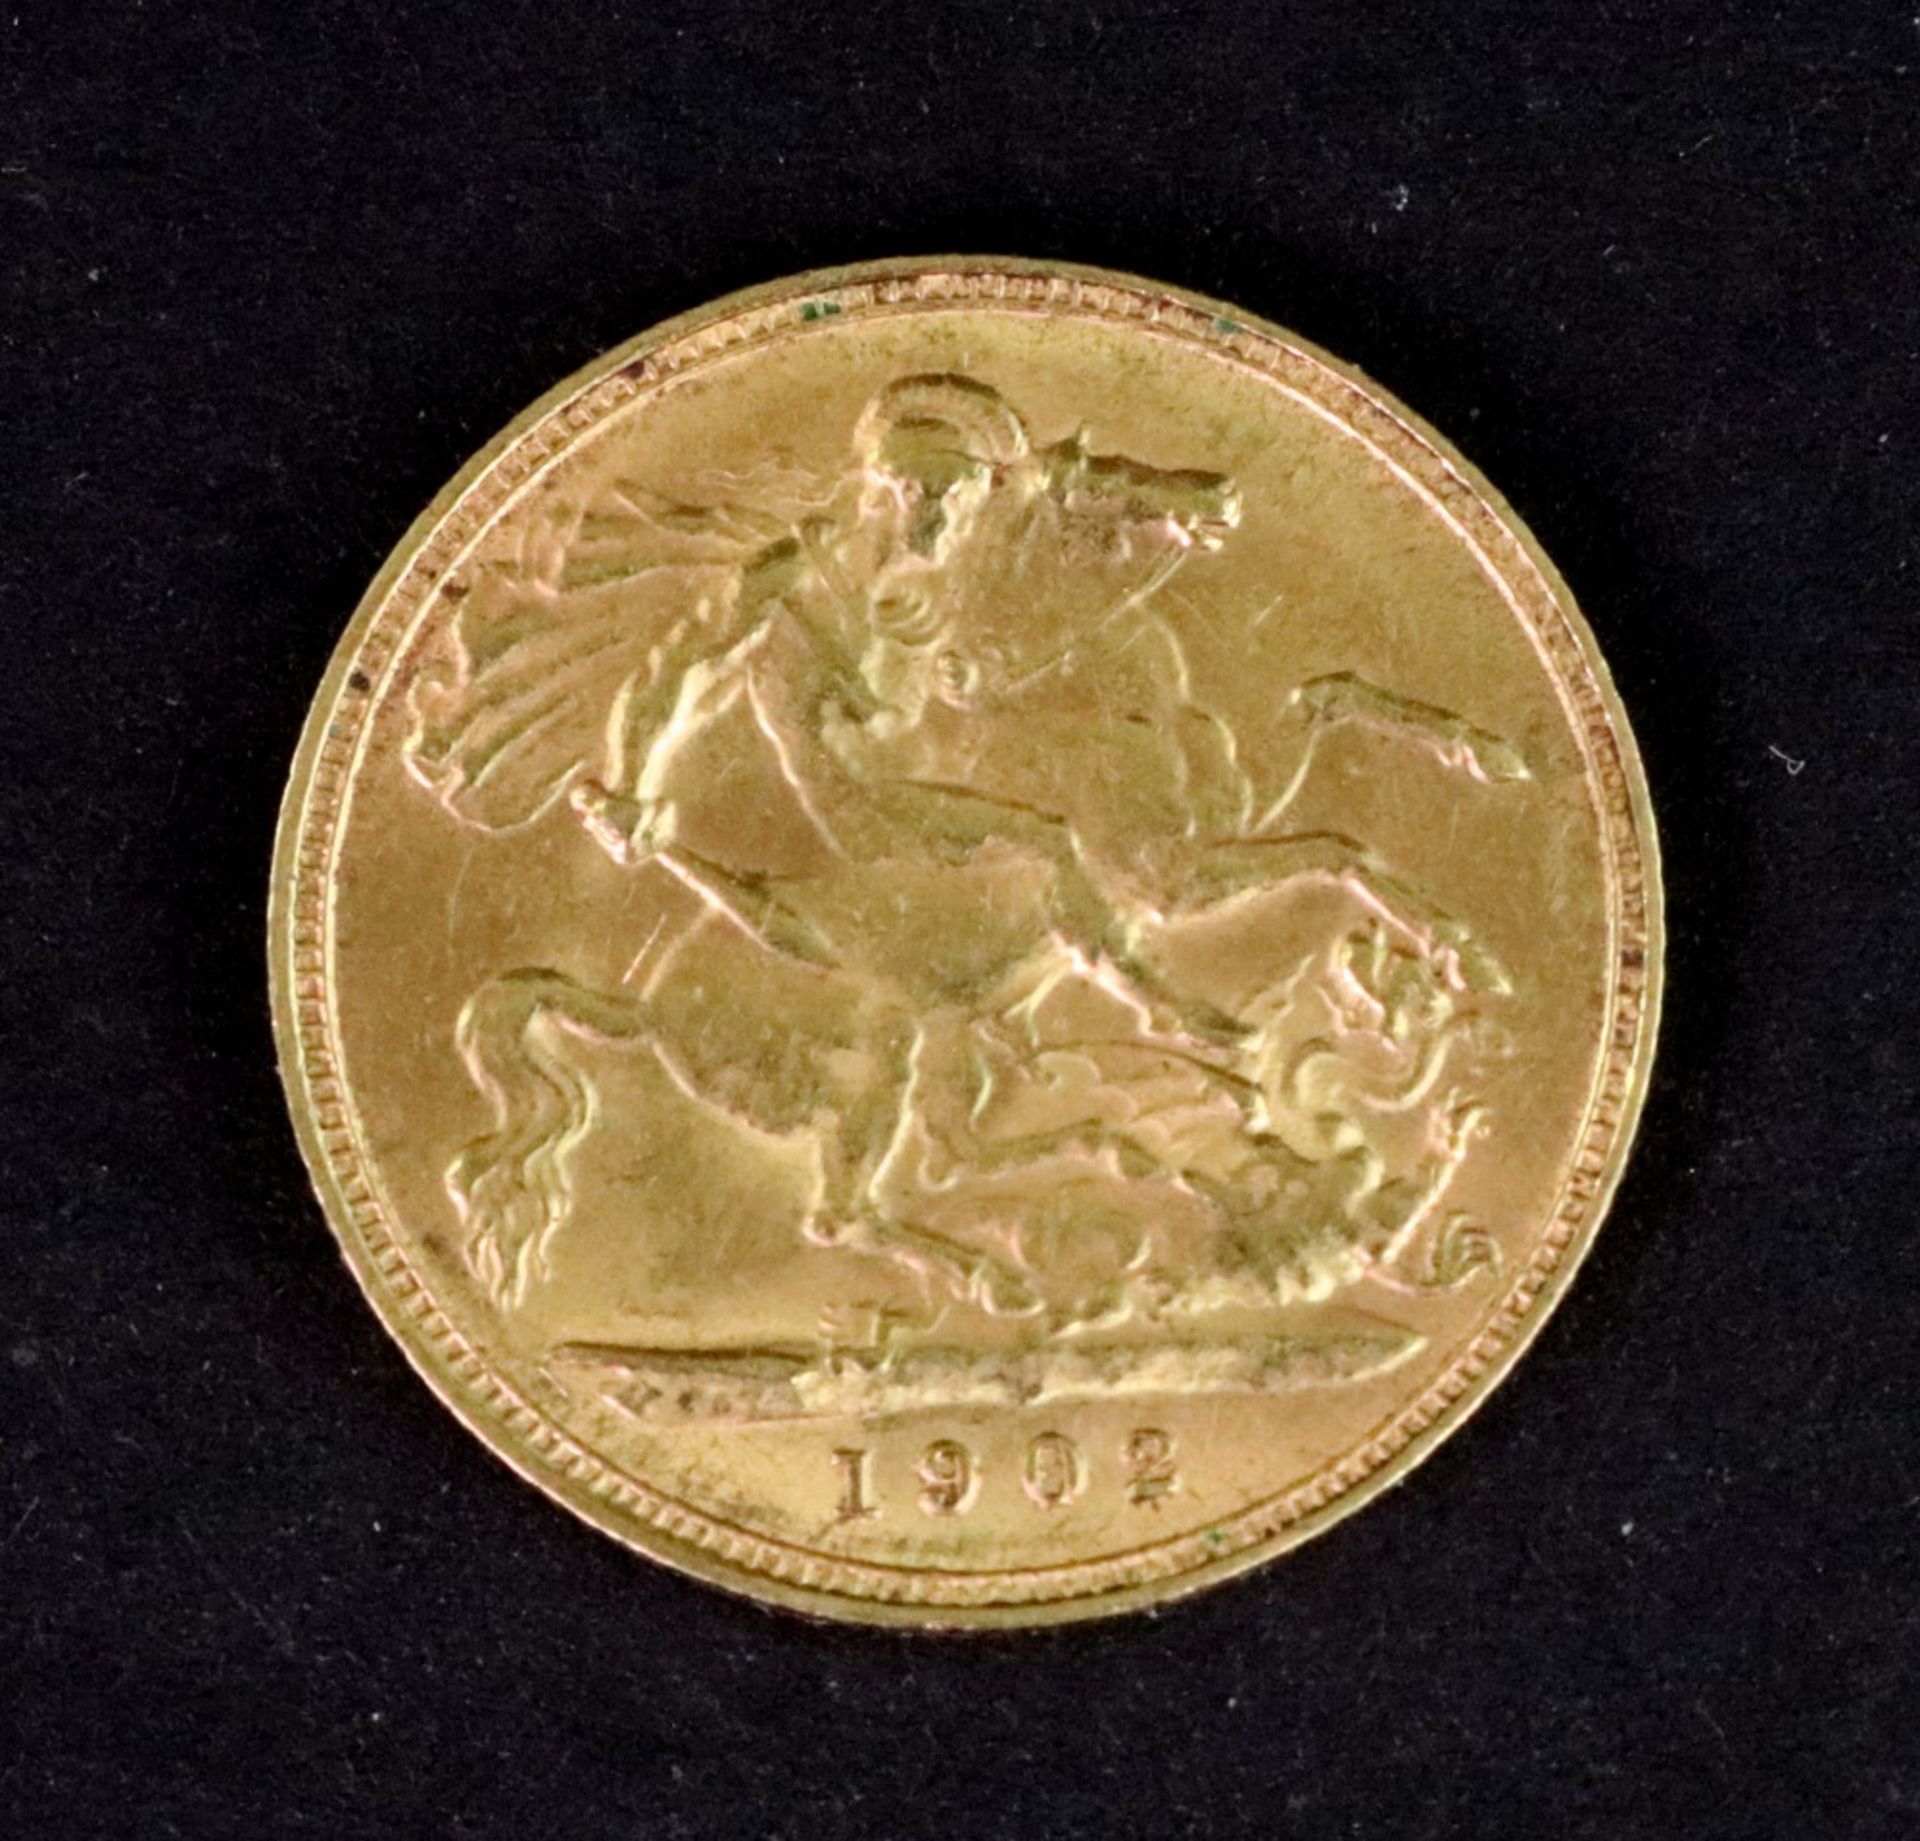 Edward VII half sovereign 1902.